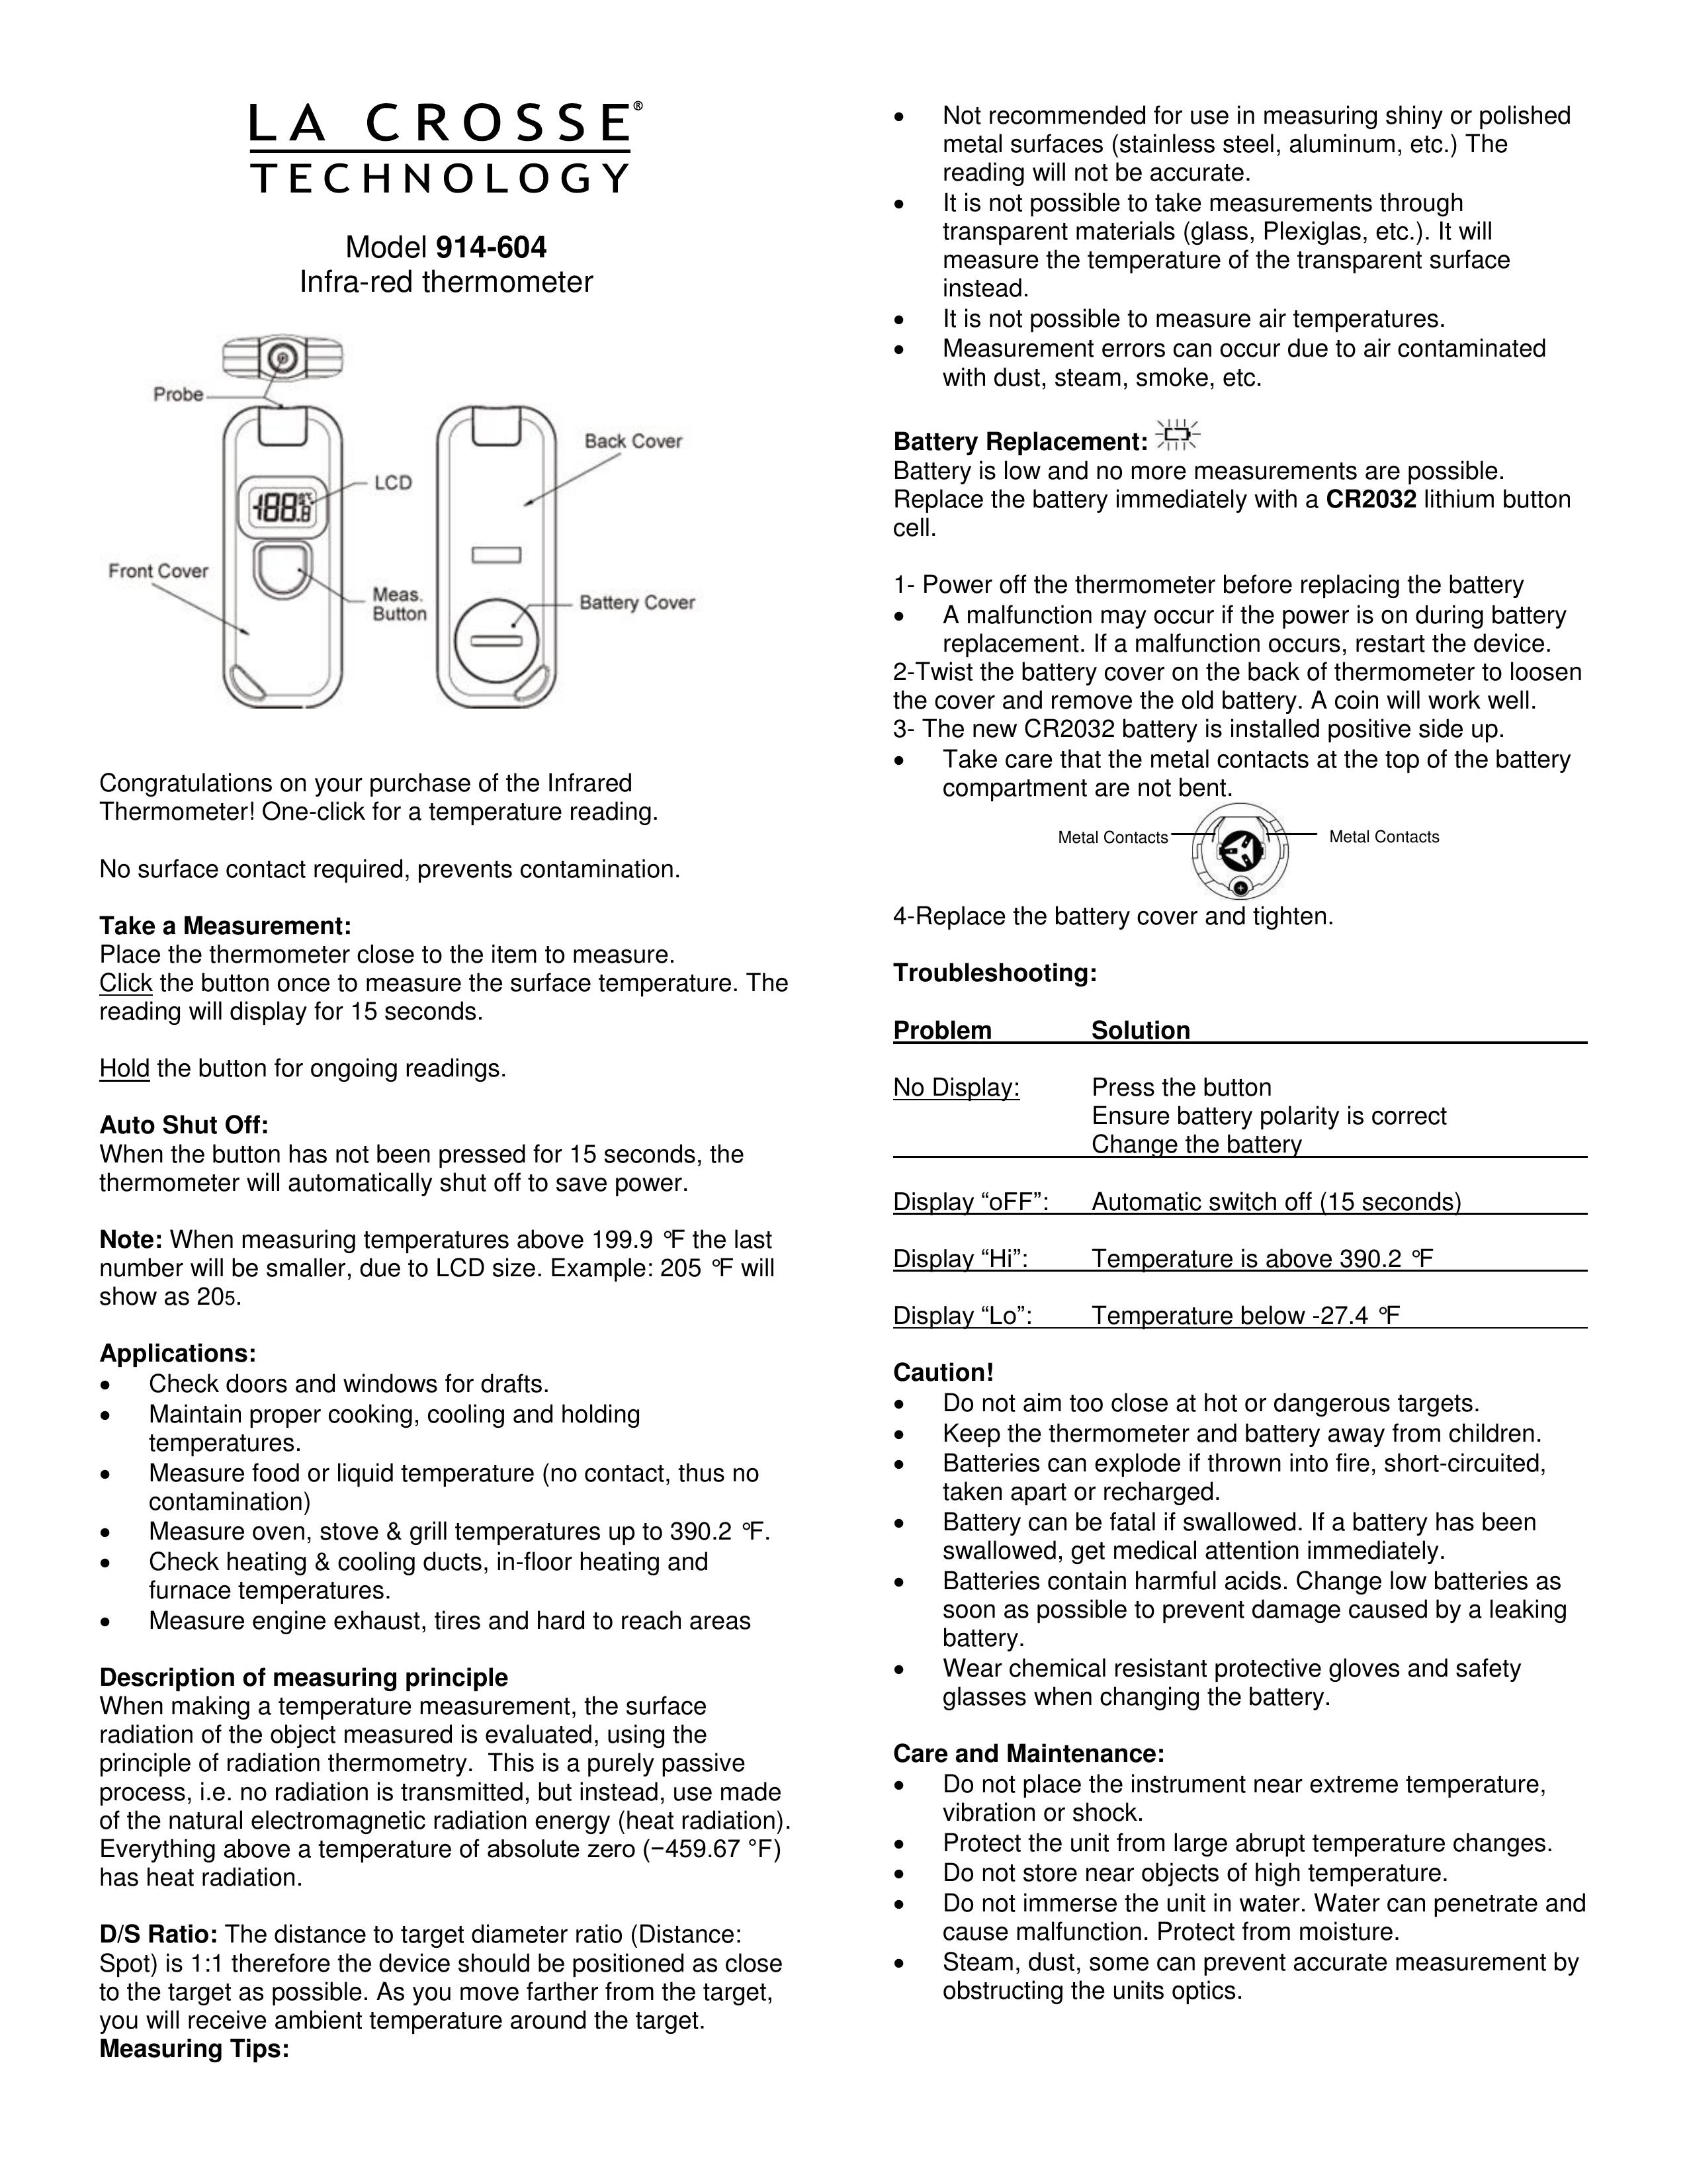 La Crosse Technology 914-604 Thermometer User Manual